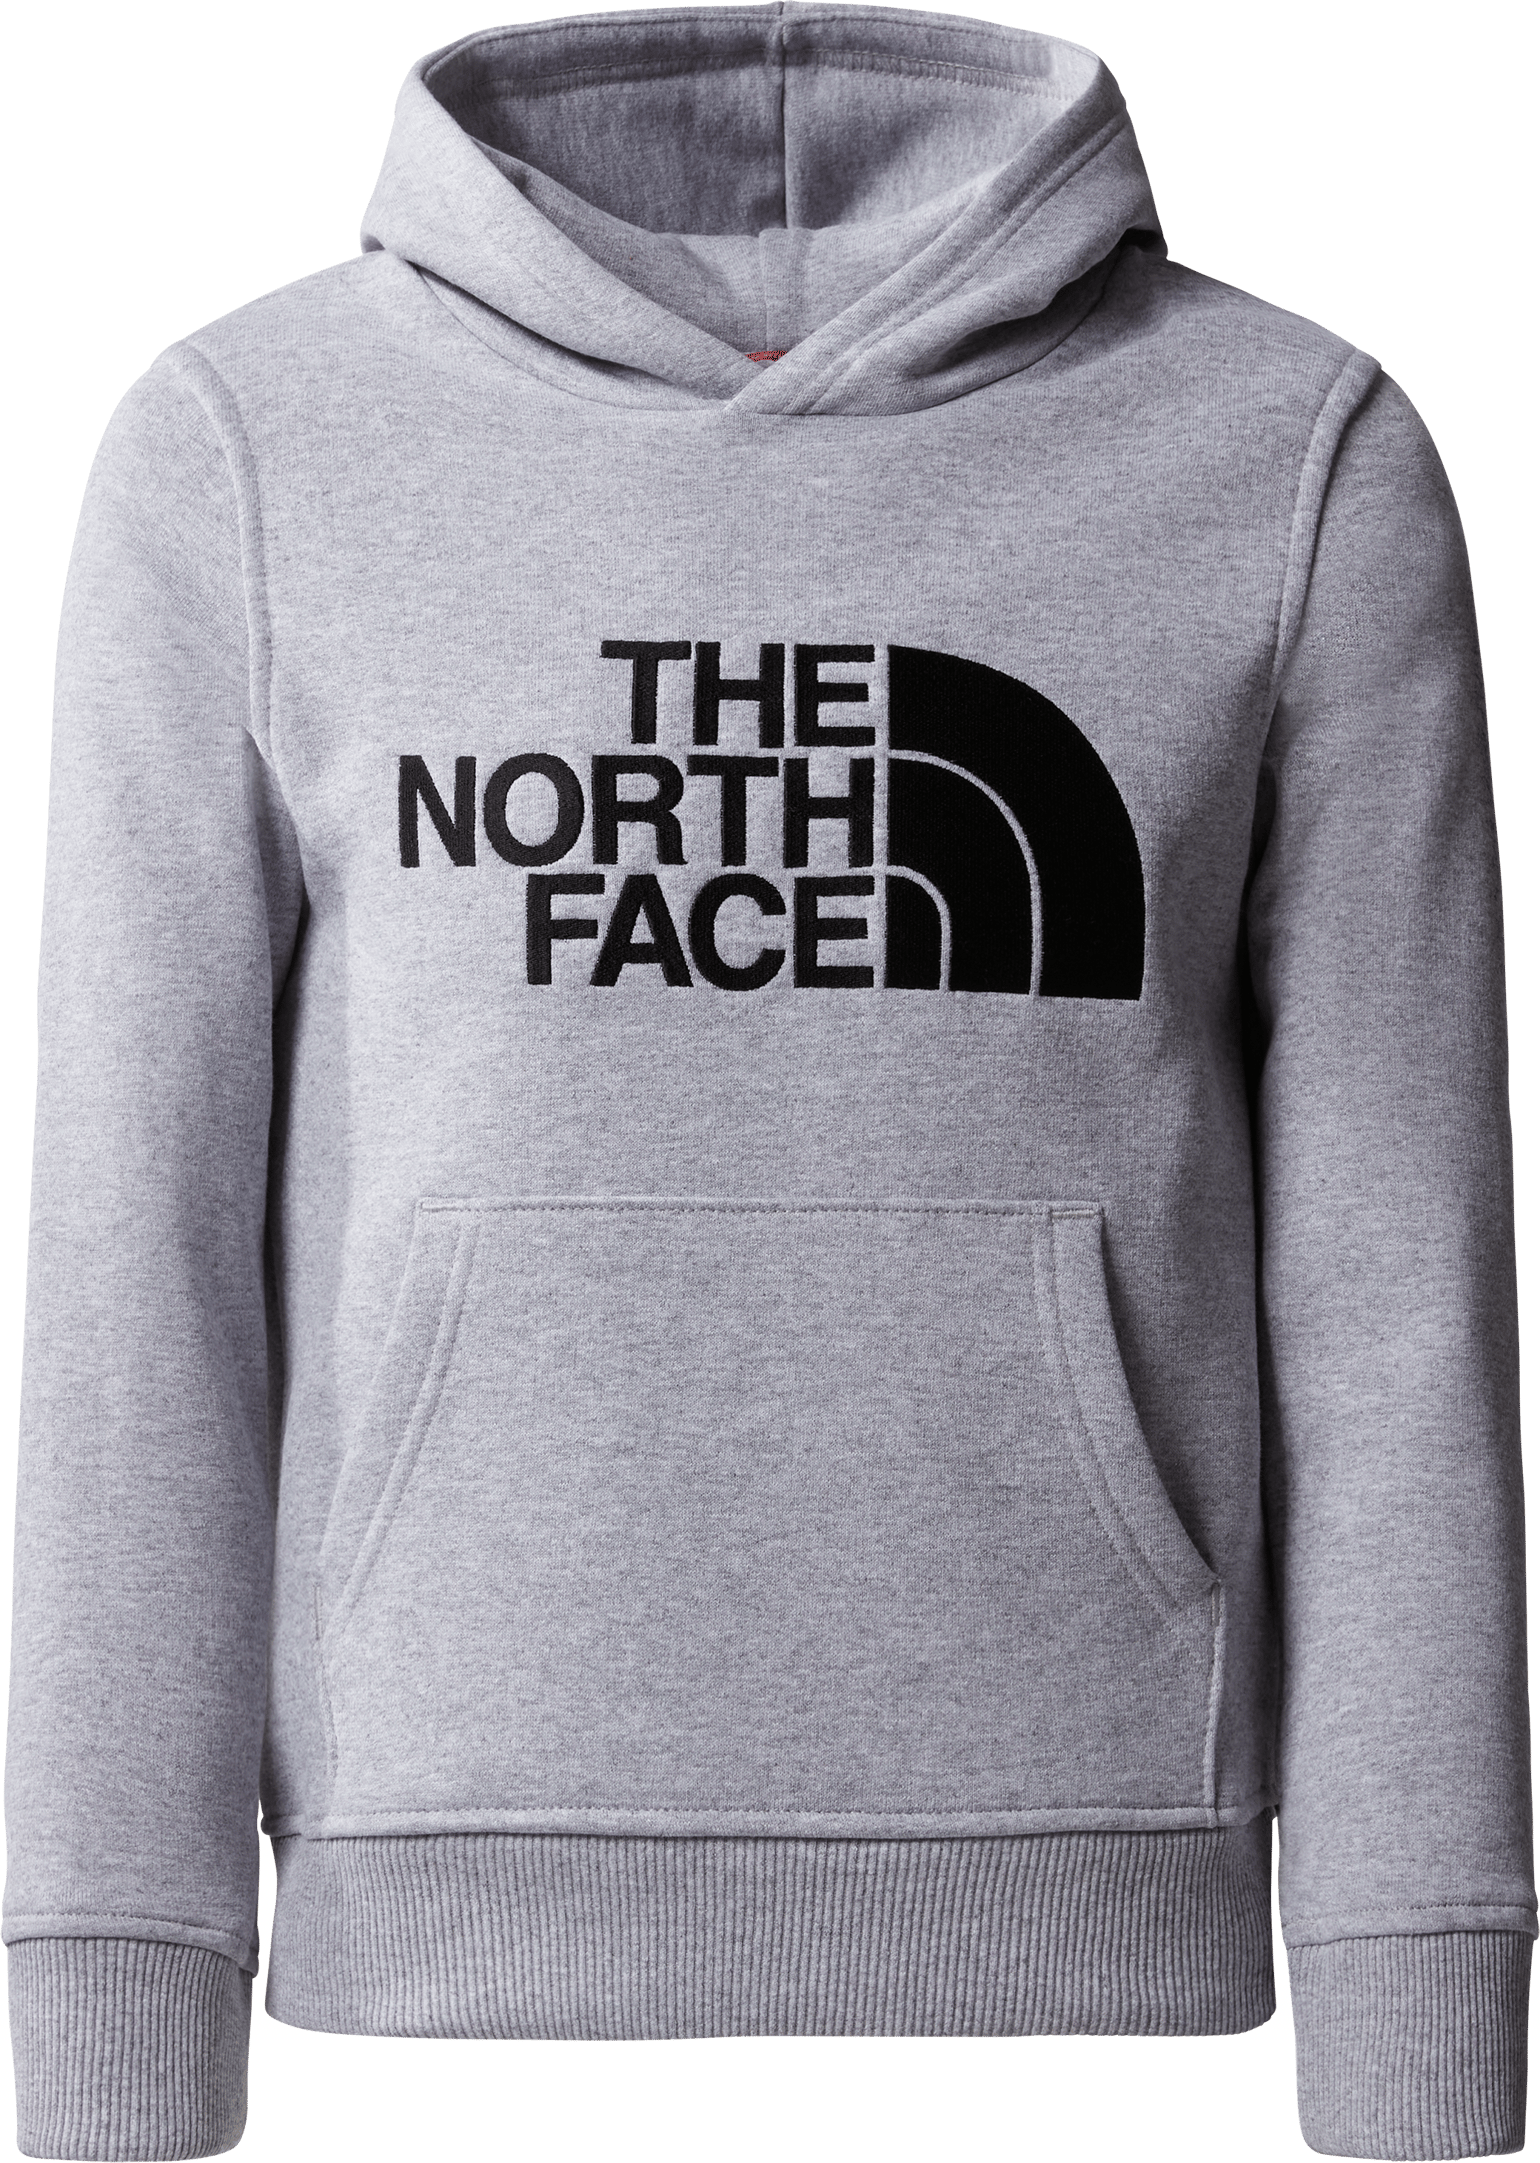 The North Face Boys' Drew Peak Pullover Hoodie TNF Light Grey Heather